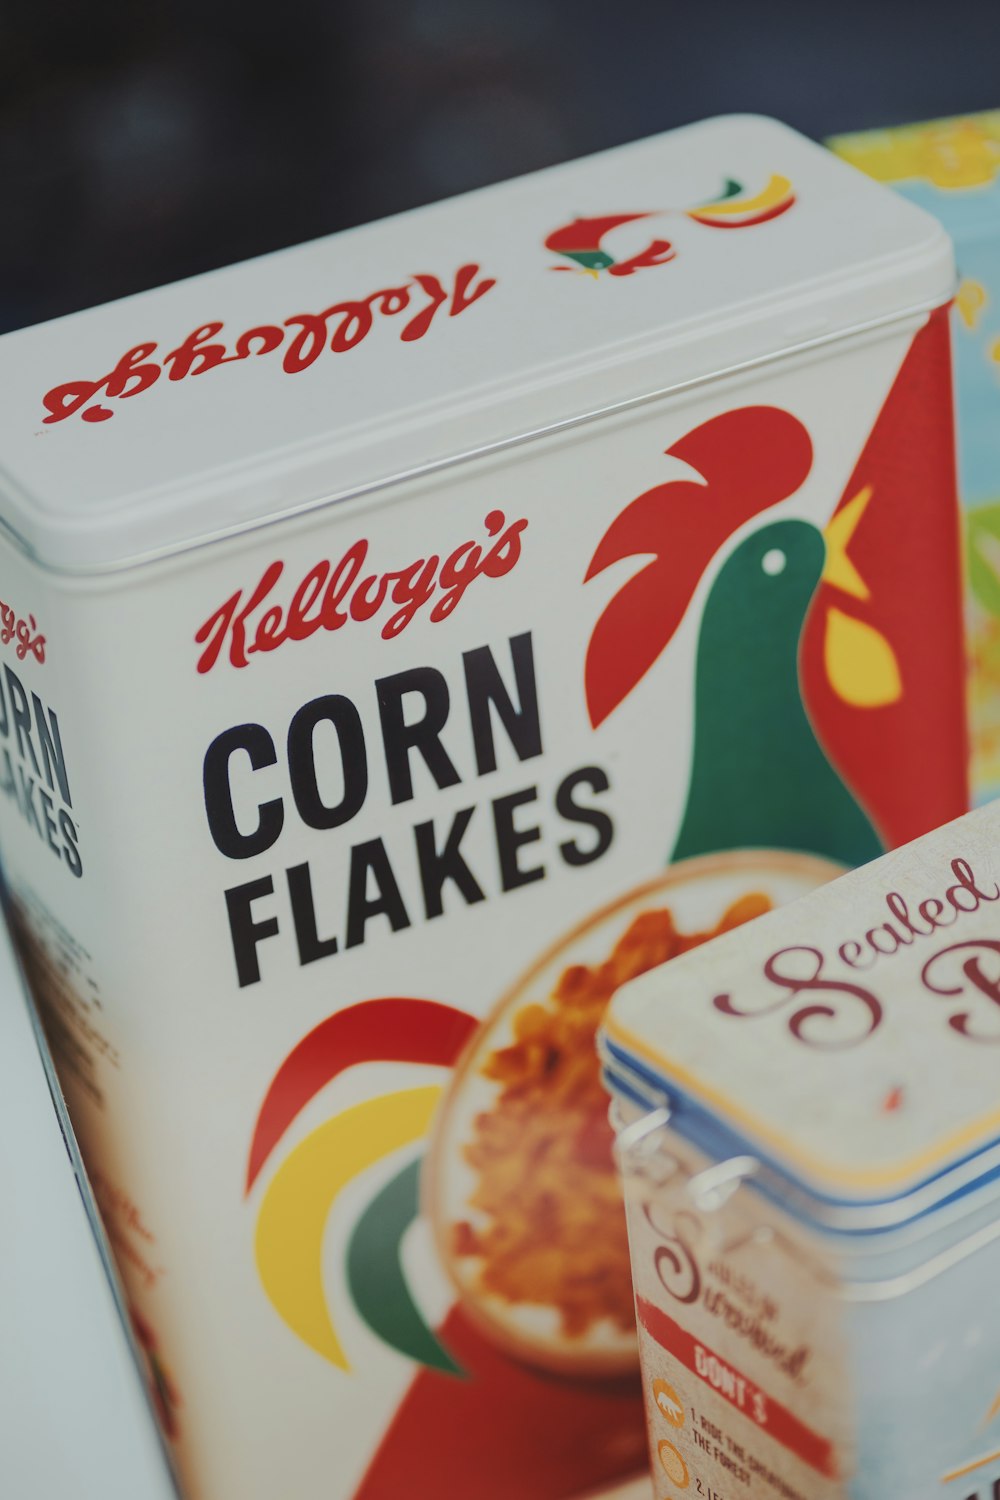 Kellogg's Corn Flakes can